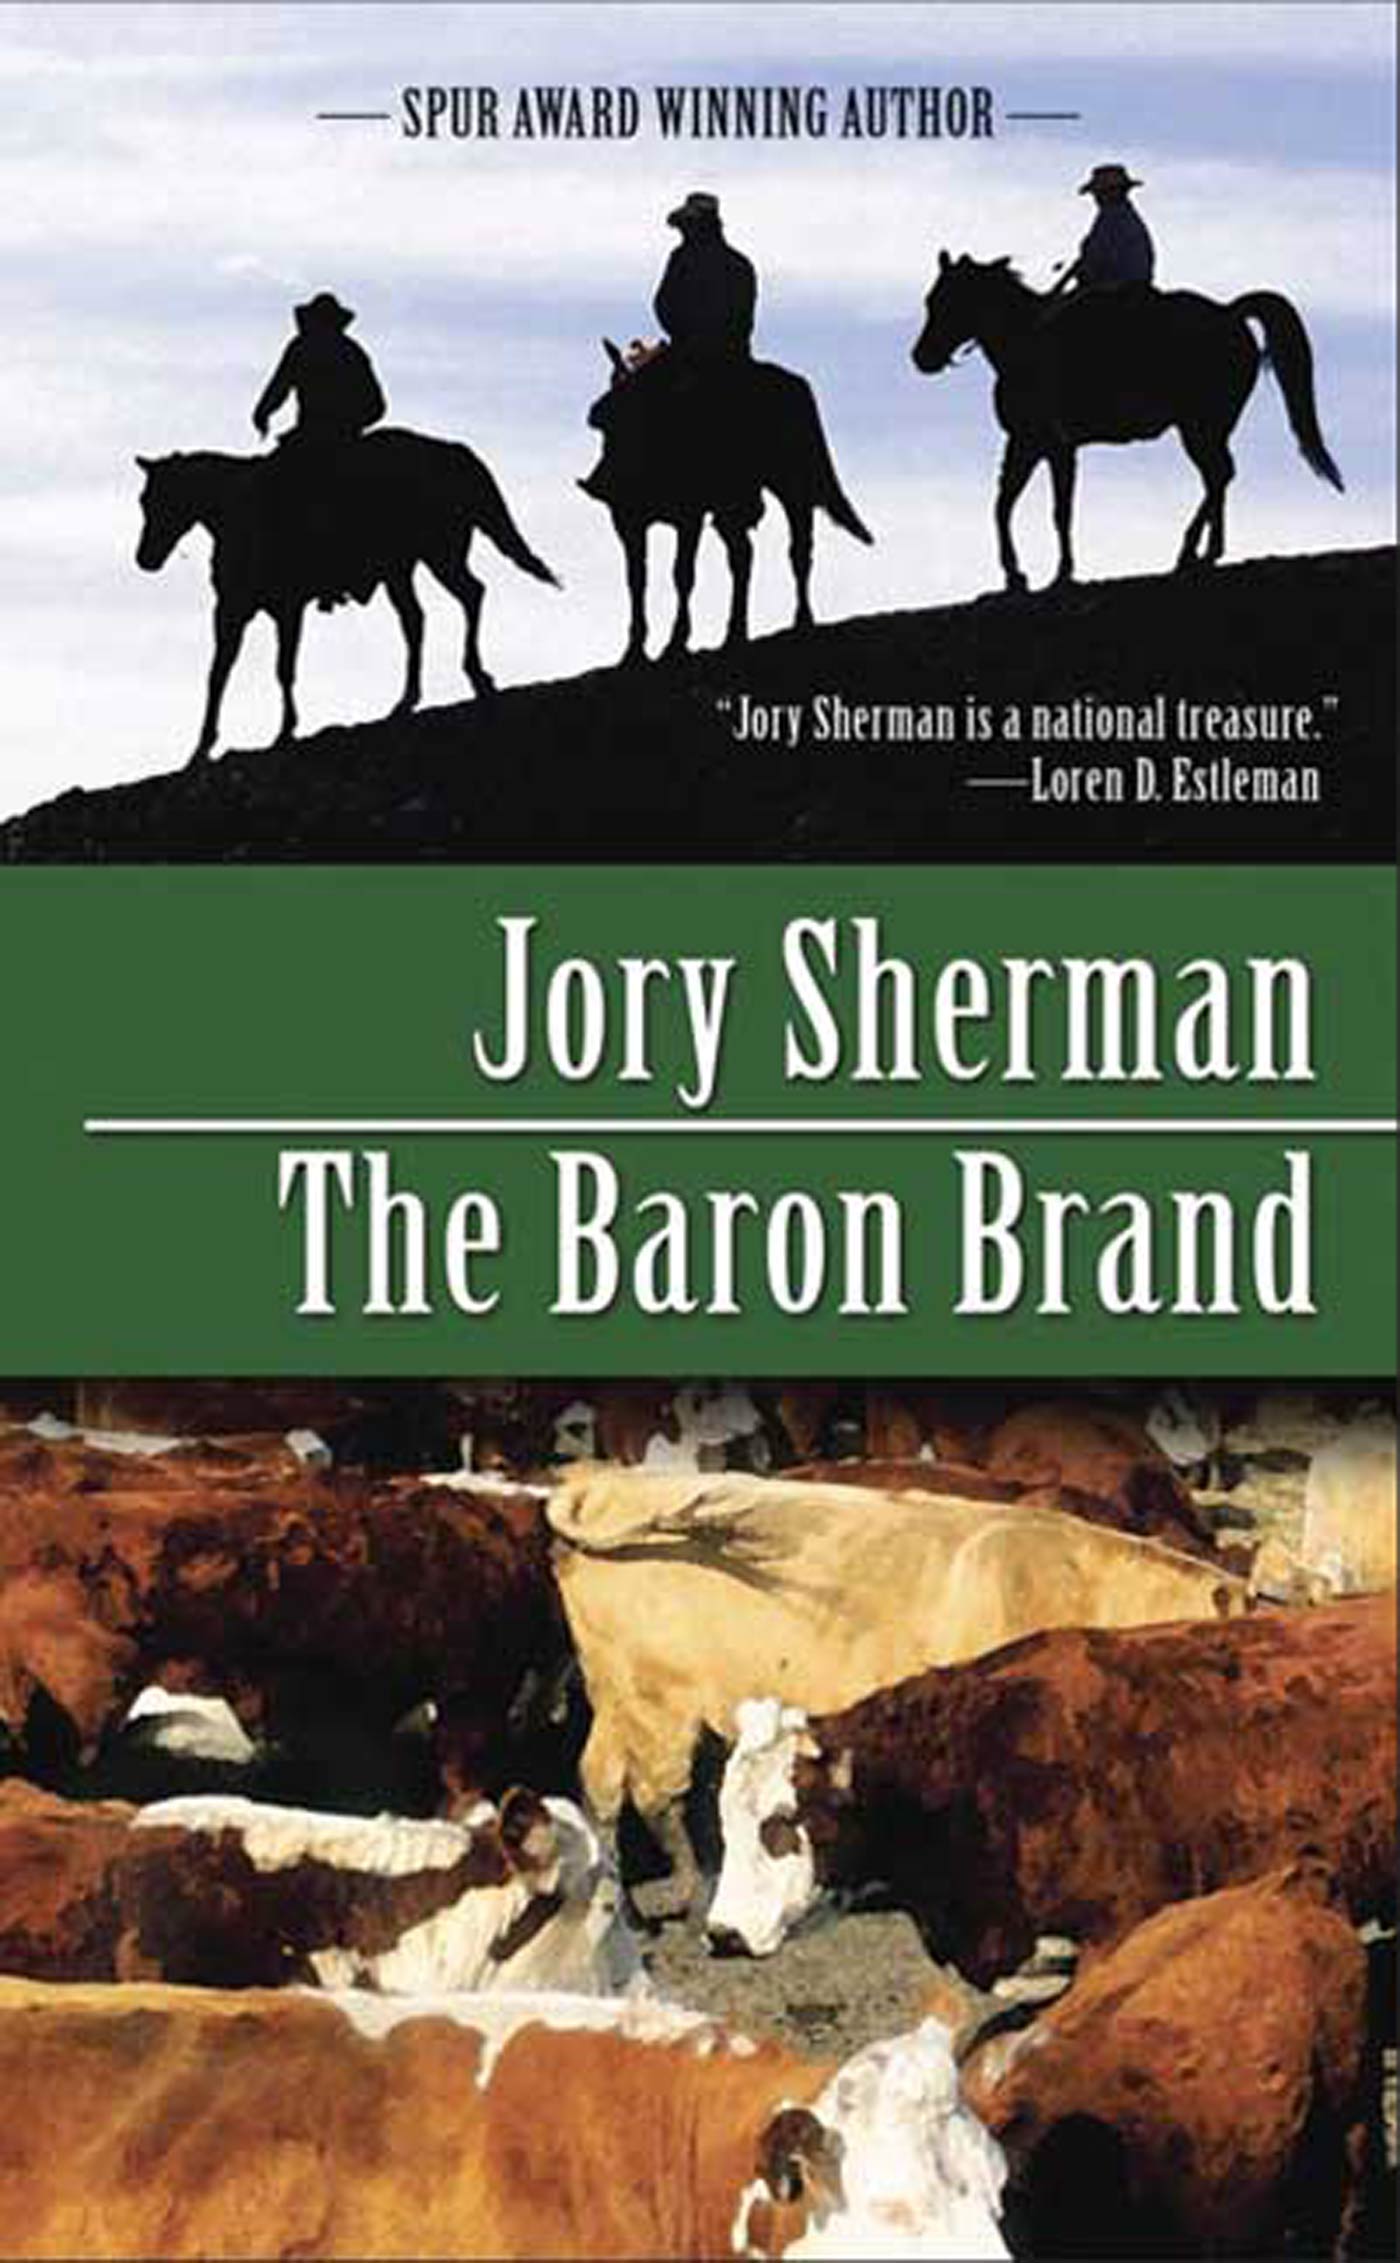 The Baron Brand : A Martin Baron Novel by Jory Sherman